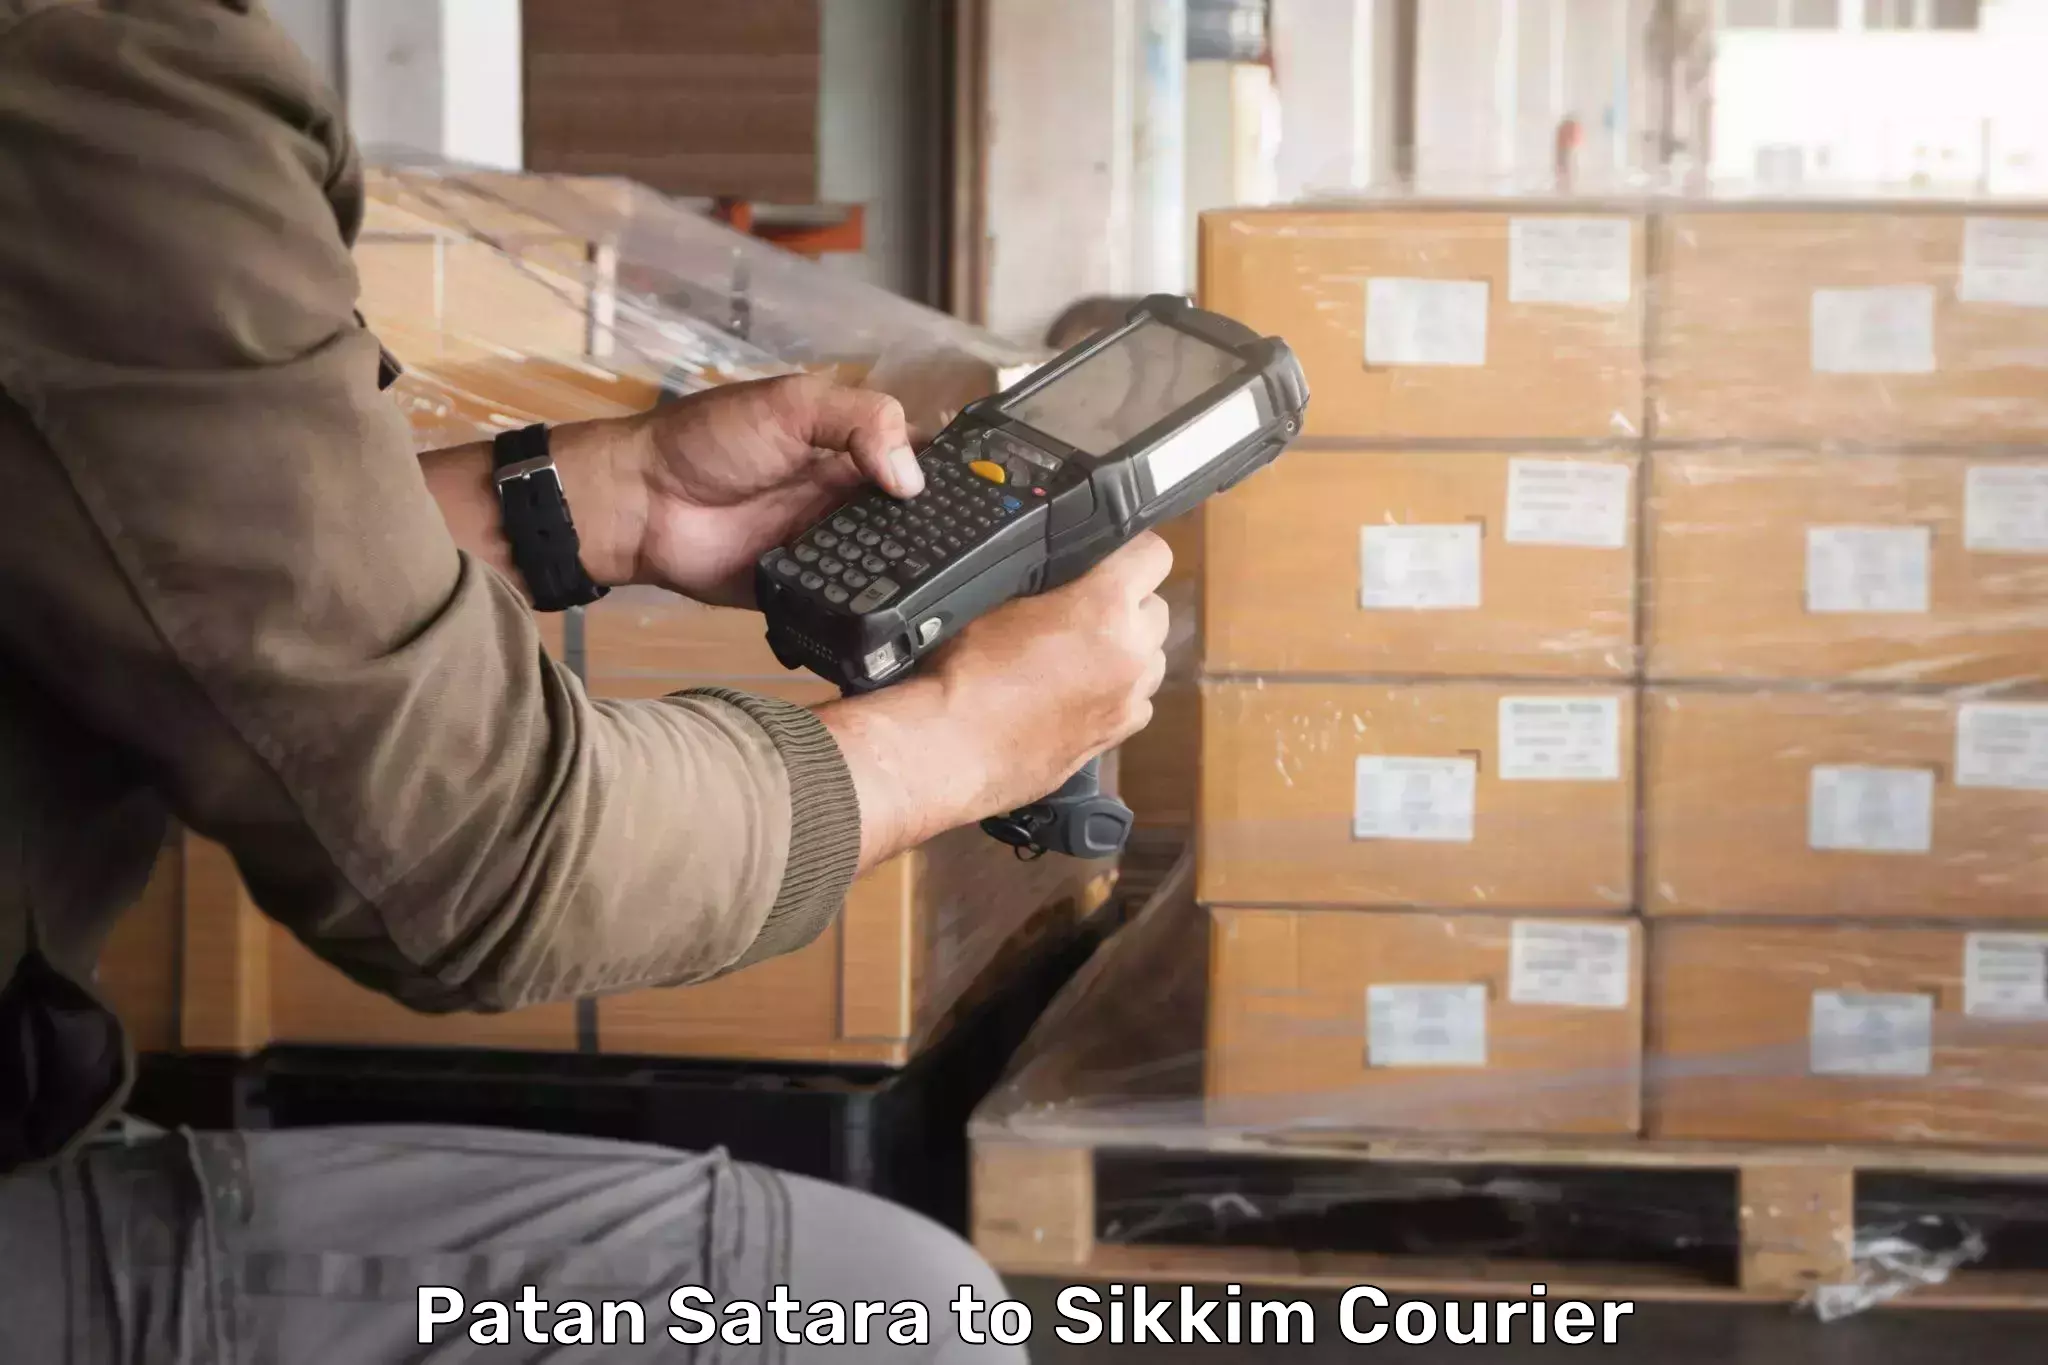 24-hour courier service Patan Satara to Rangpo